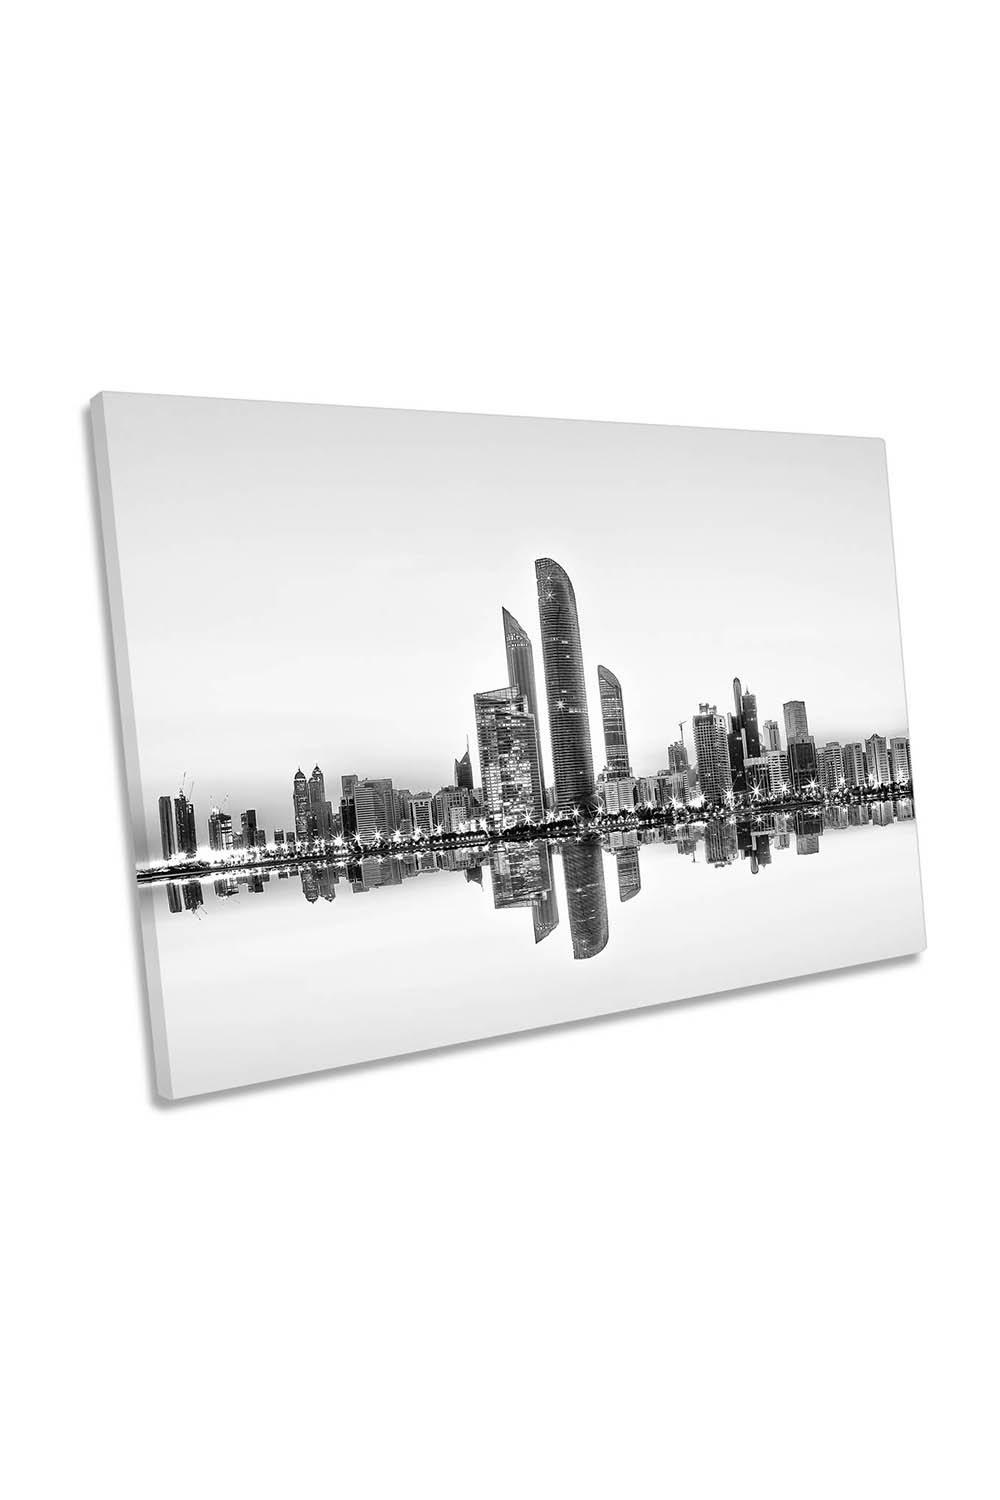 Abu Dhabi City Skyline Reflection Canvas Wall Art Picture Print